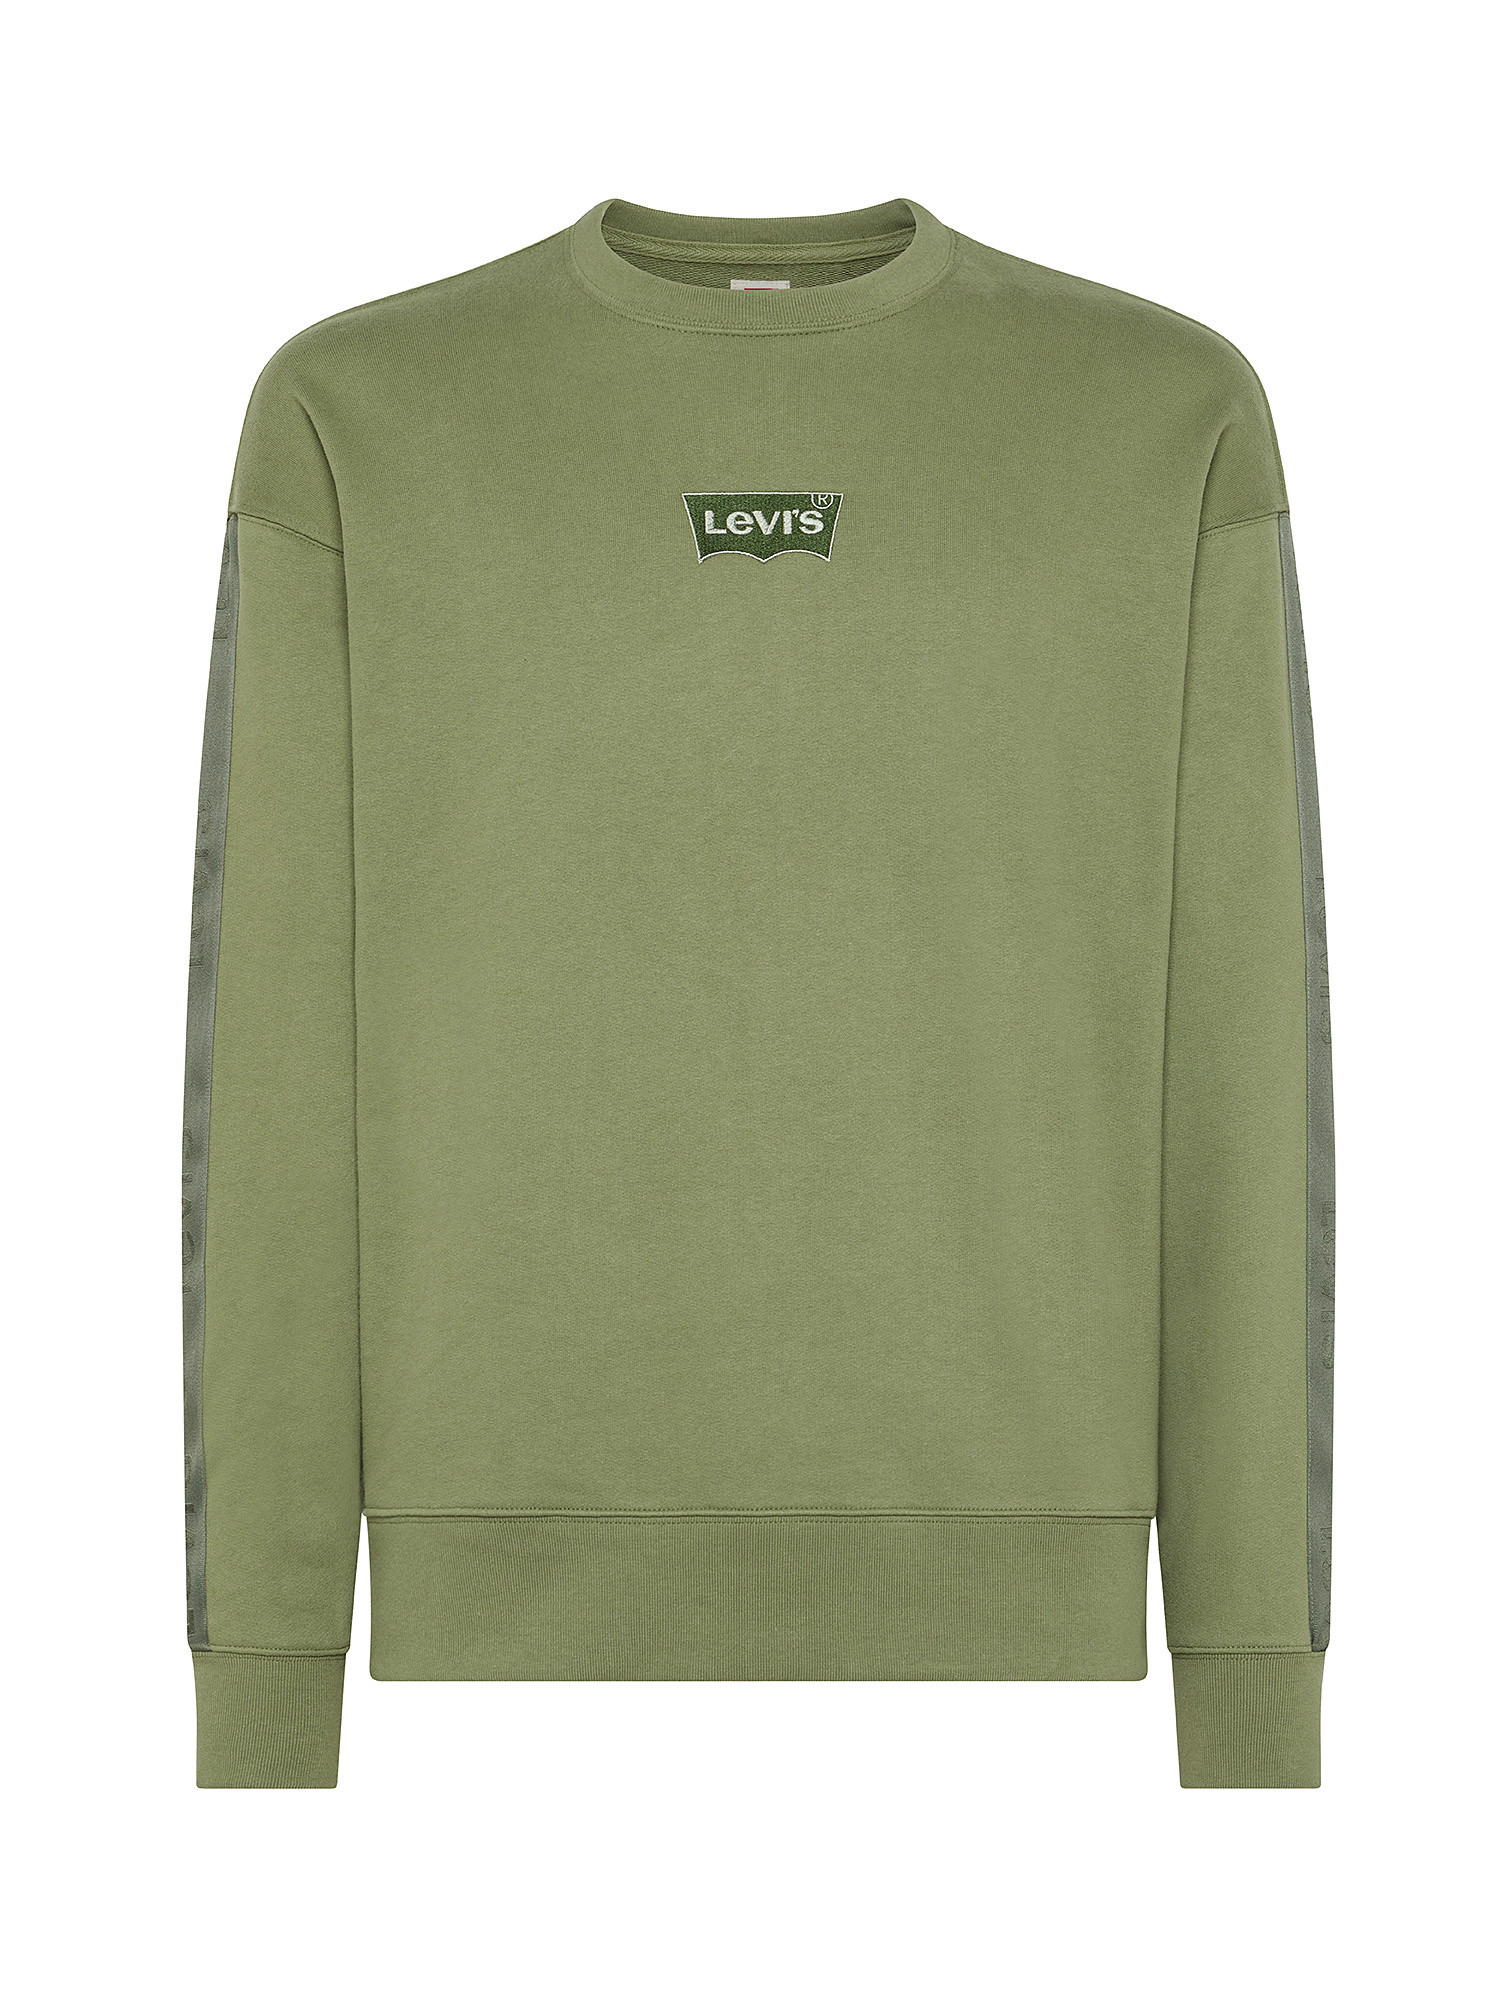 Levi's - Cotton sweatshirt with logo, Light Green, large image number 0